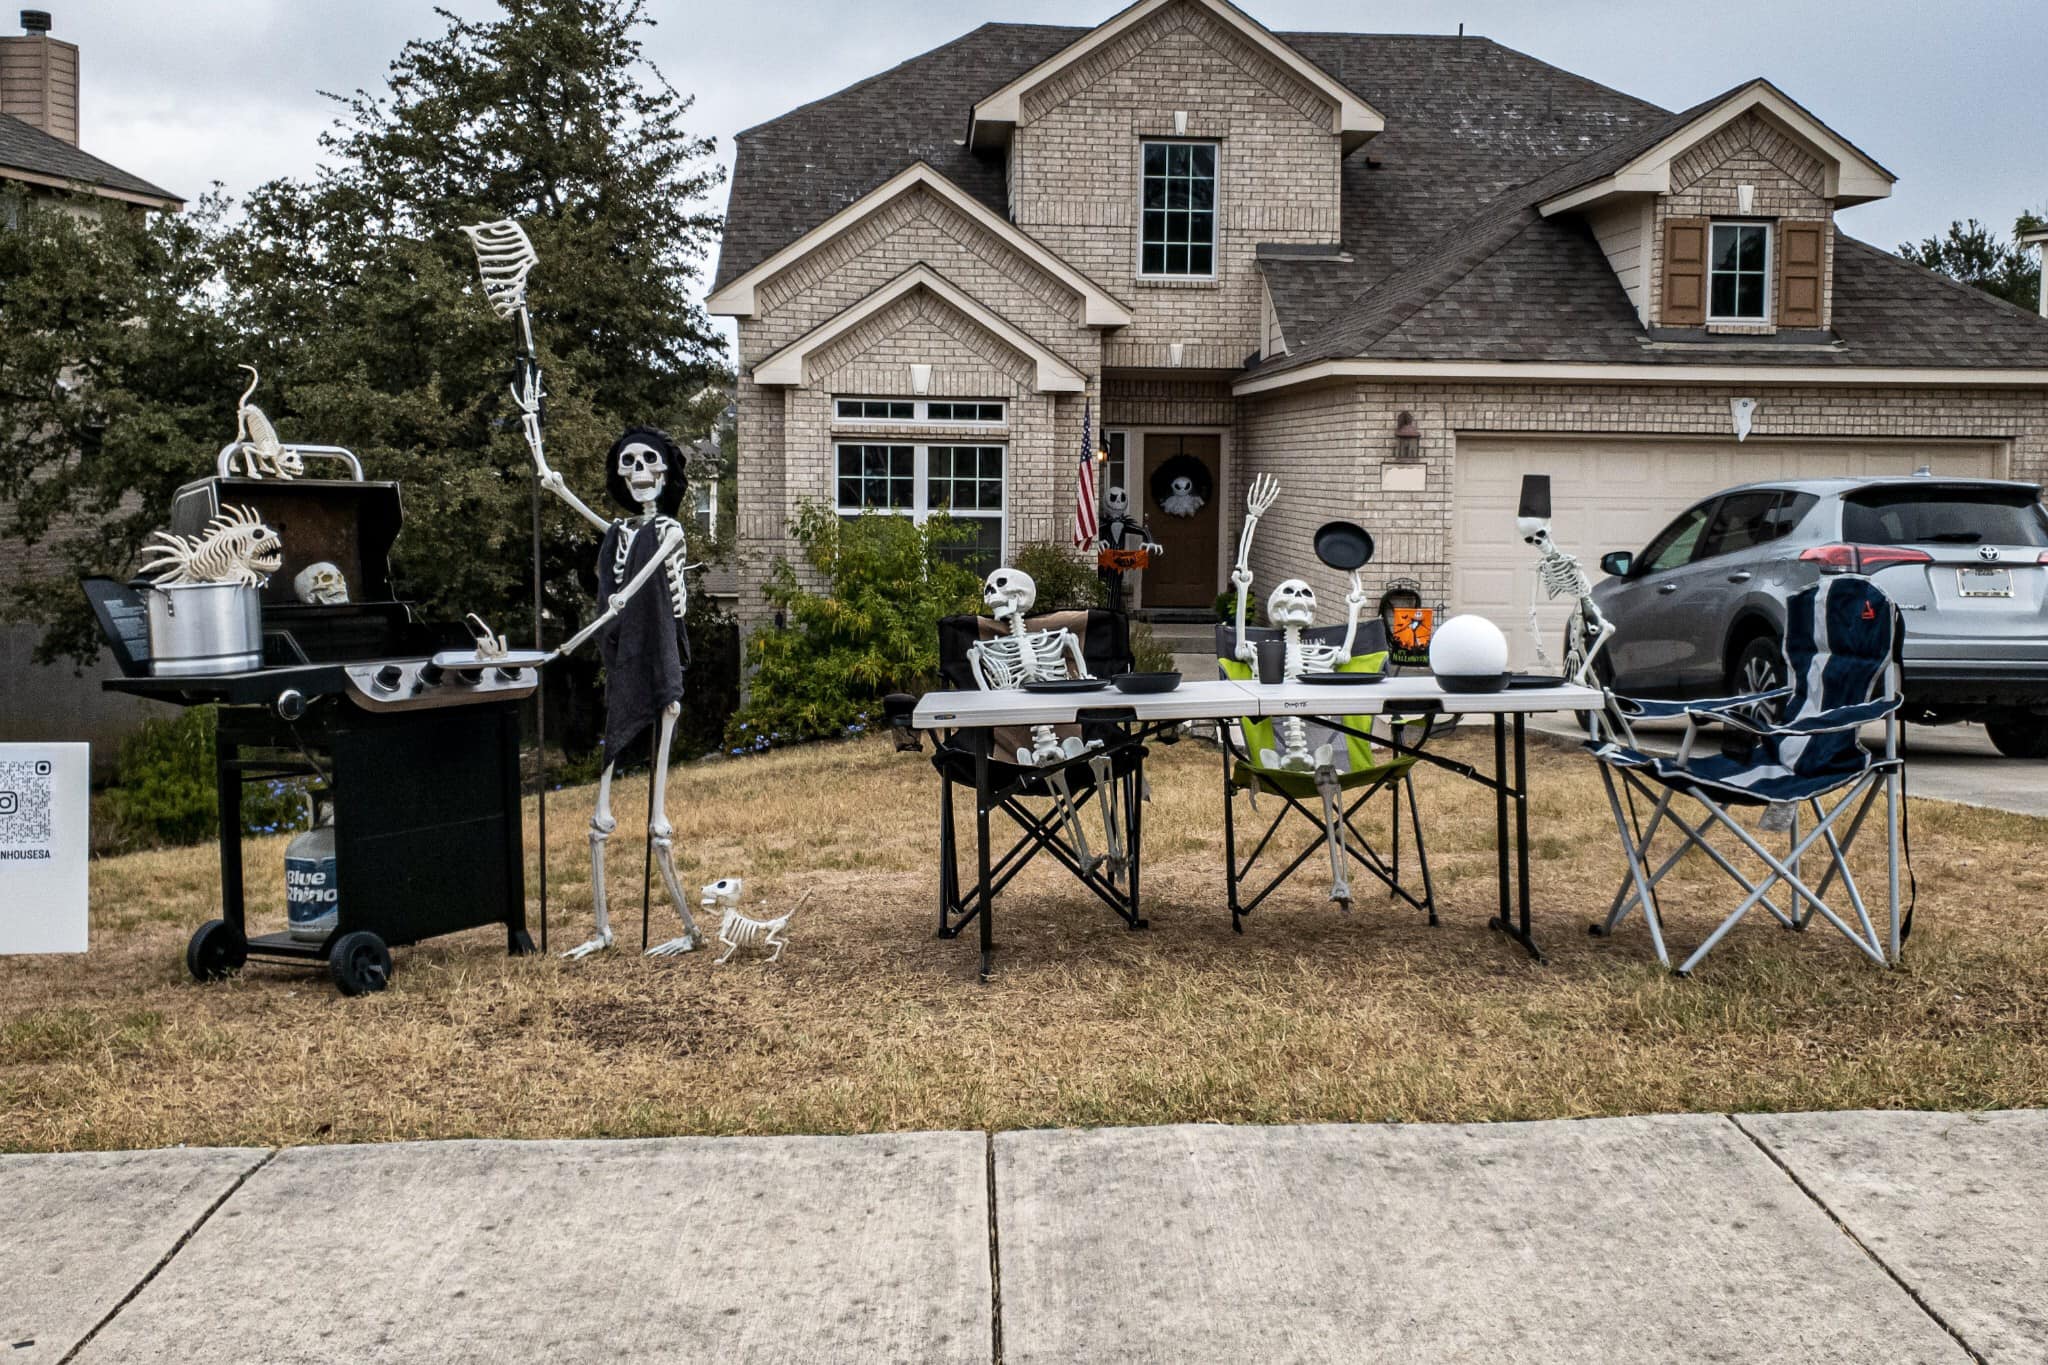 Skeleton House of San Antonio display of skeletons cooking out